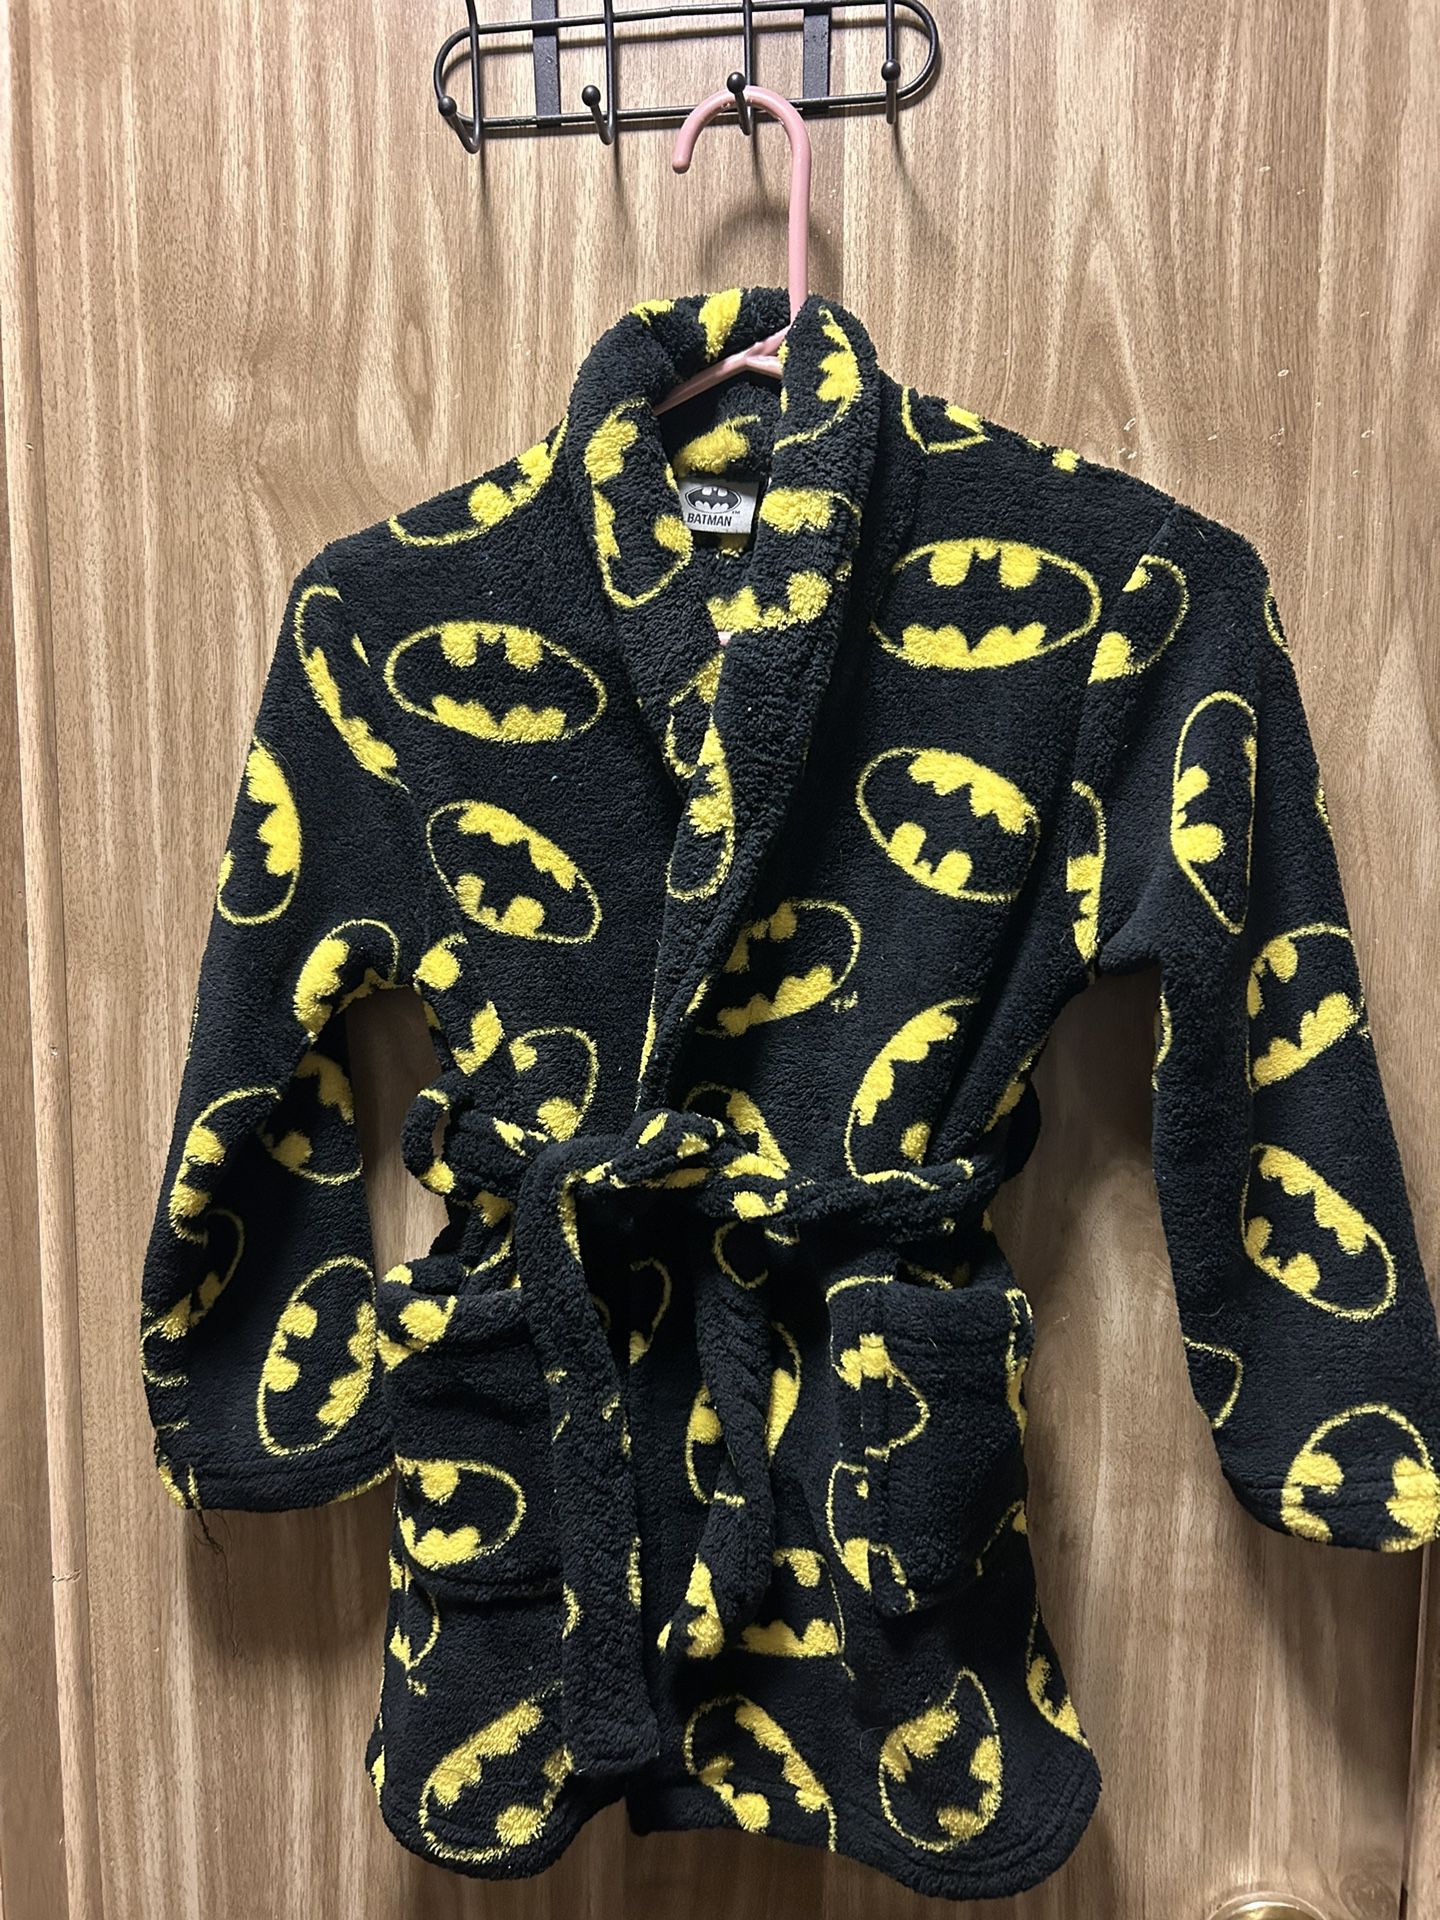 Boys Batman Robe